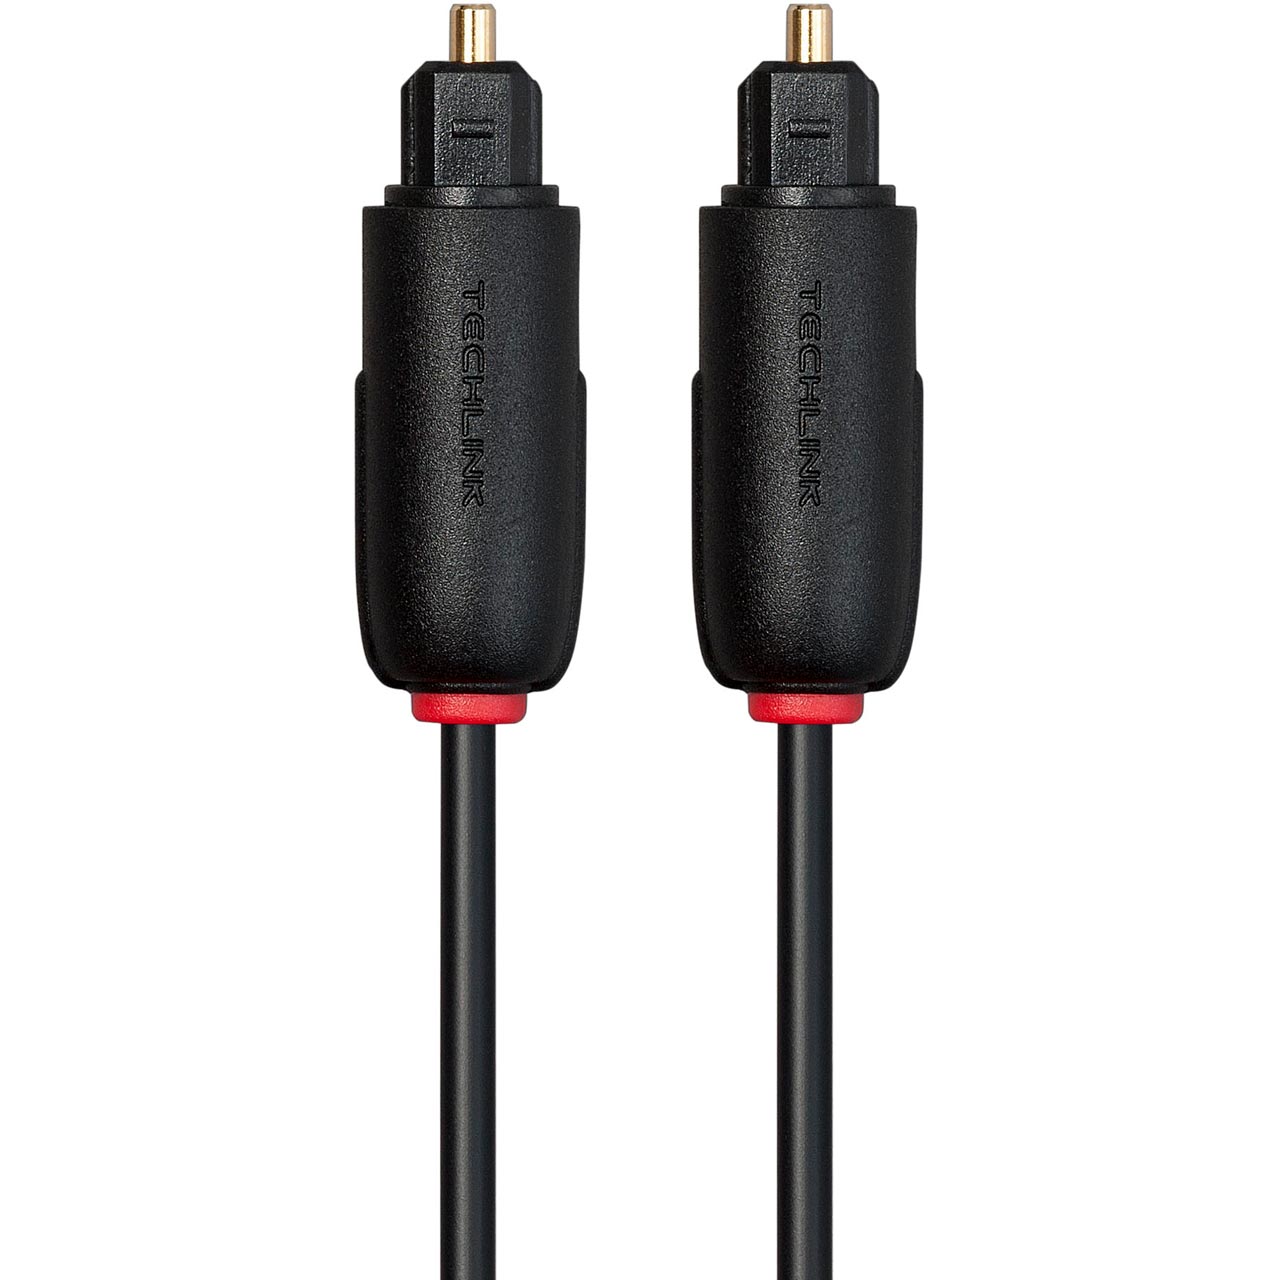 Techlink 103211 1m Digital Audio Optical Cable Review